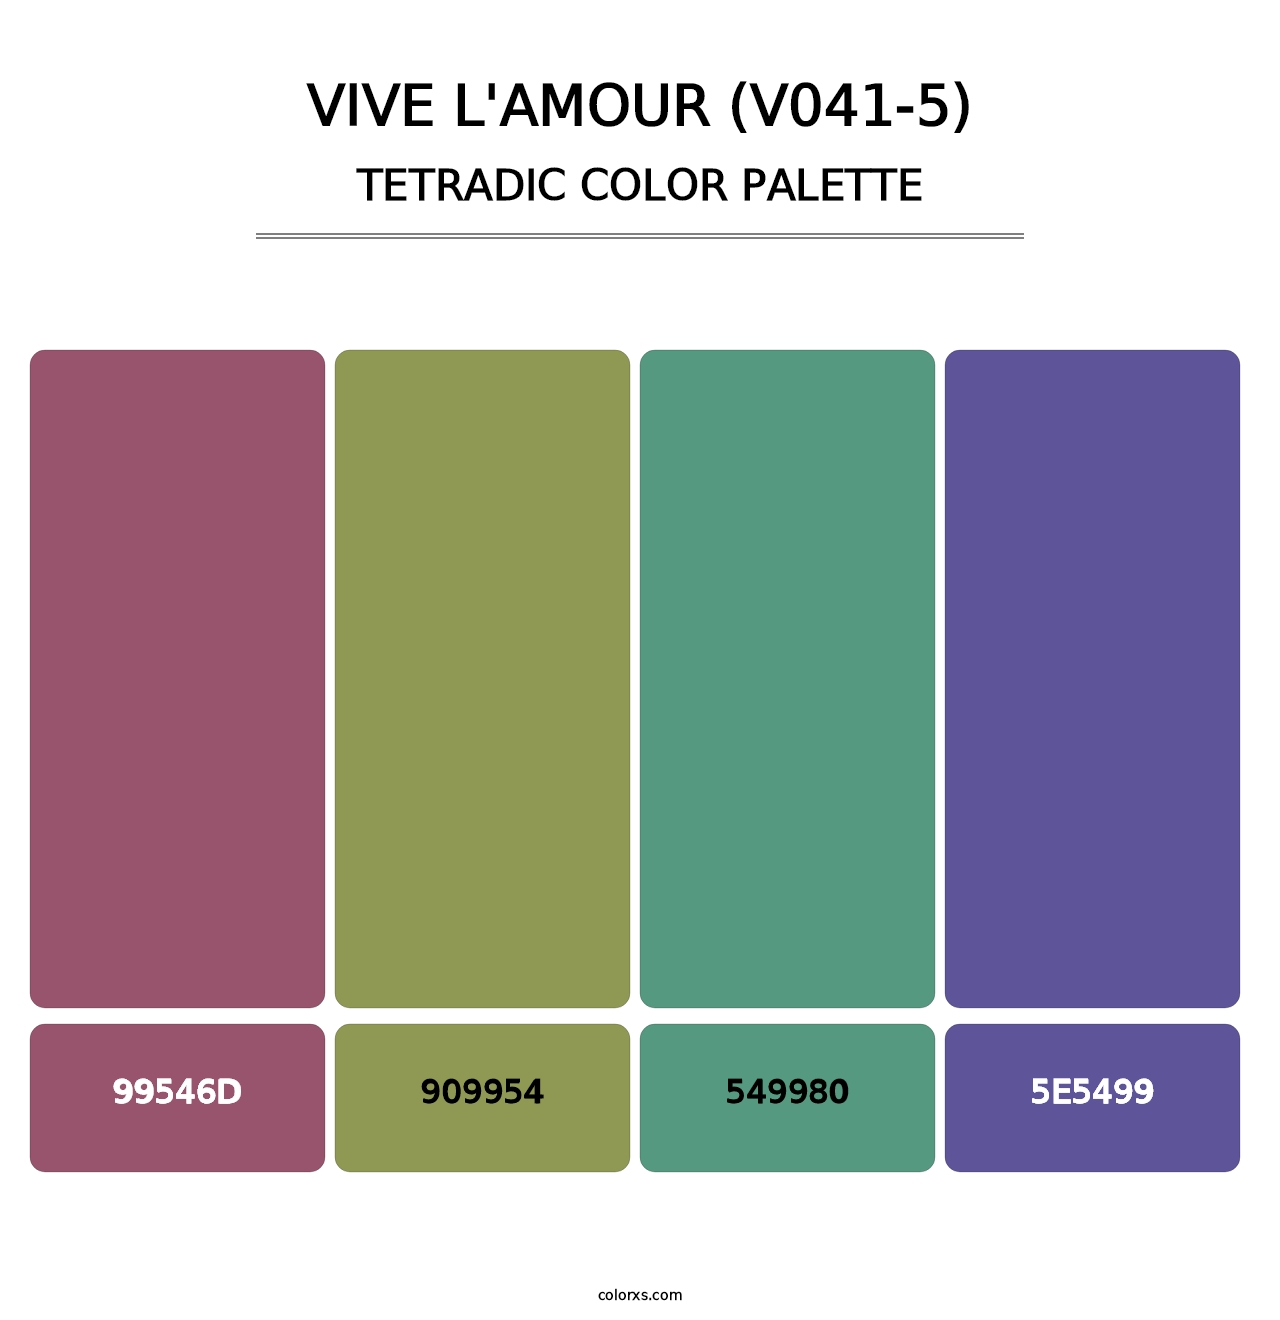 Vive l'amour (V041-5) - Tetradic Color Palette